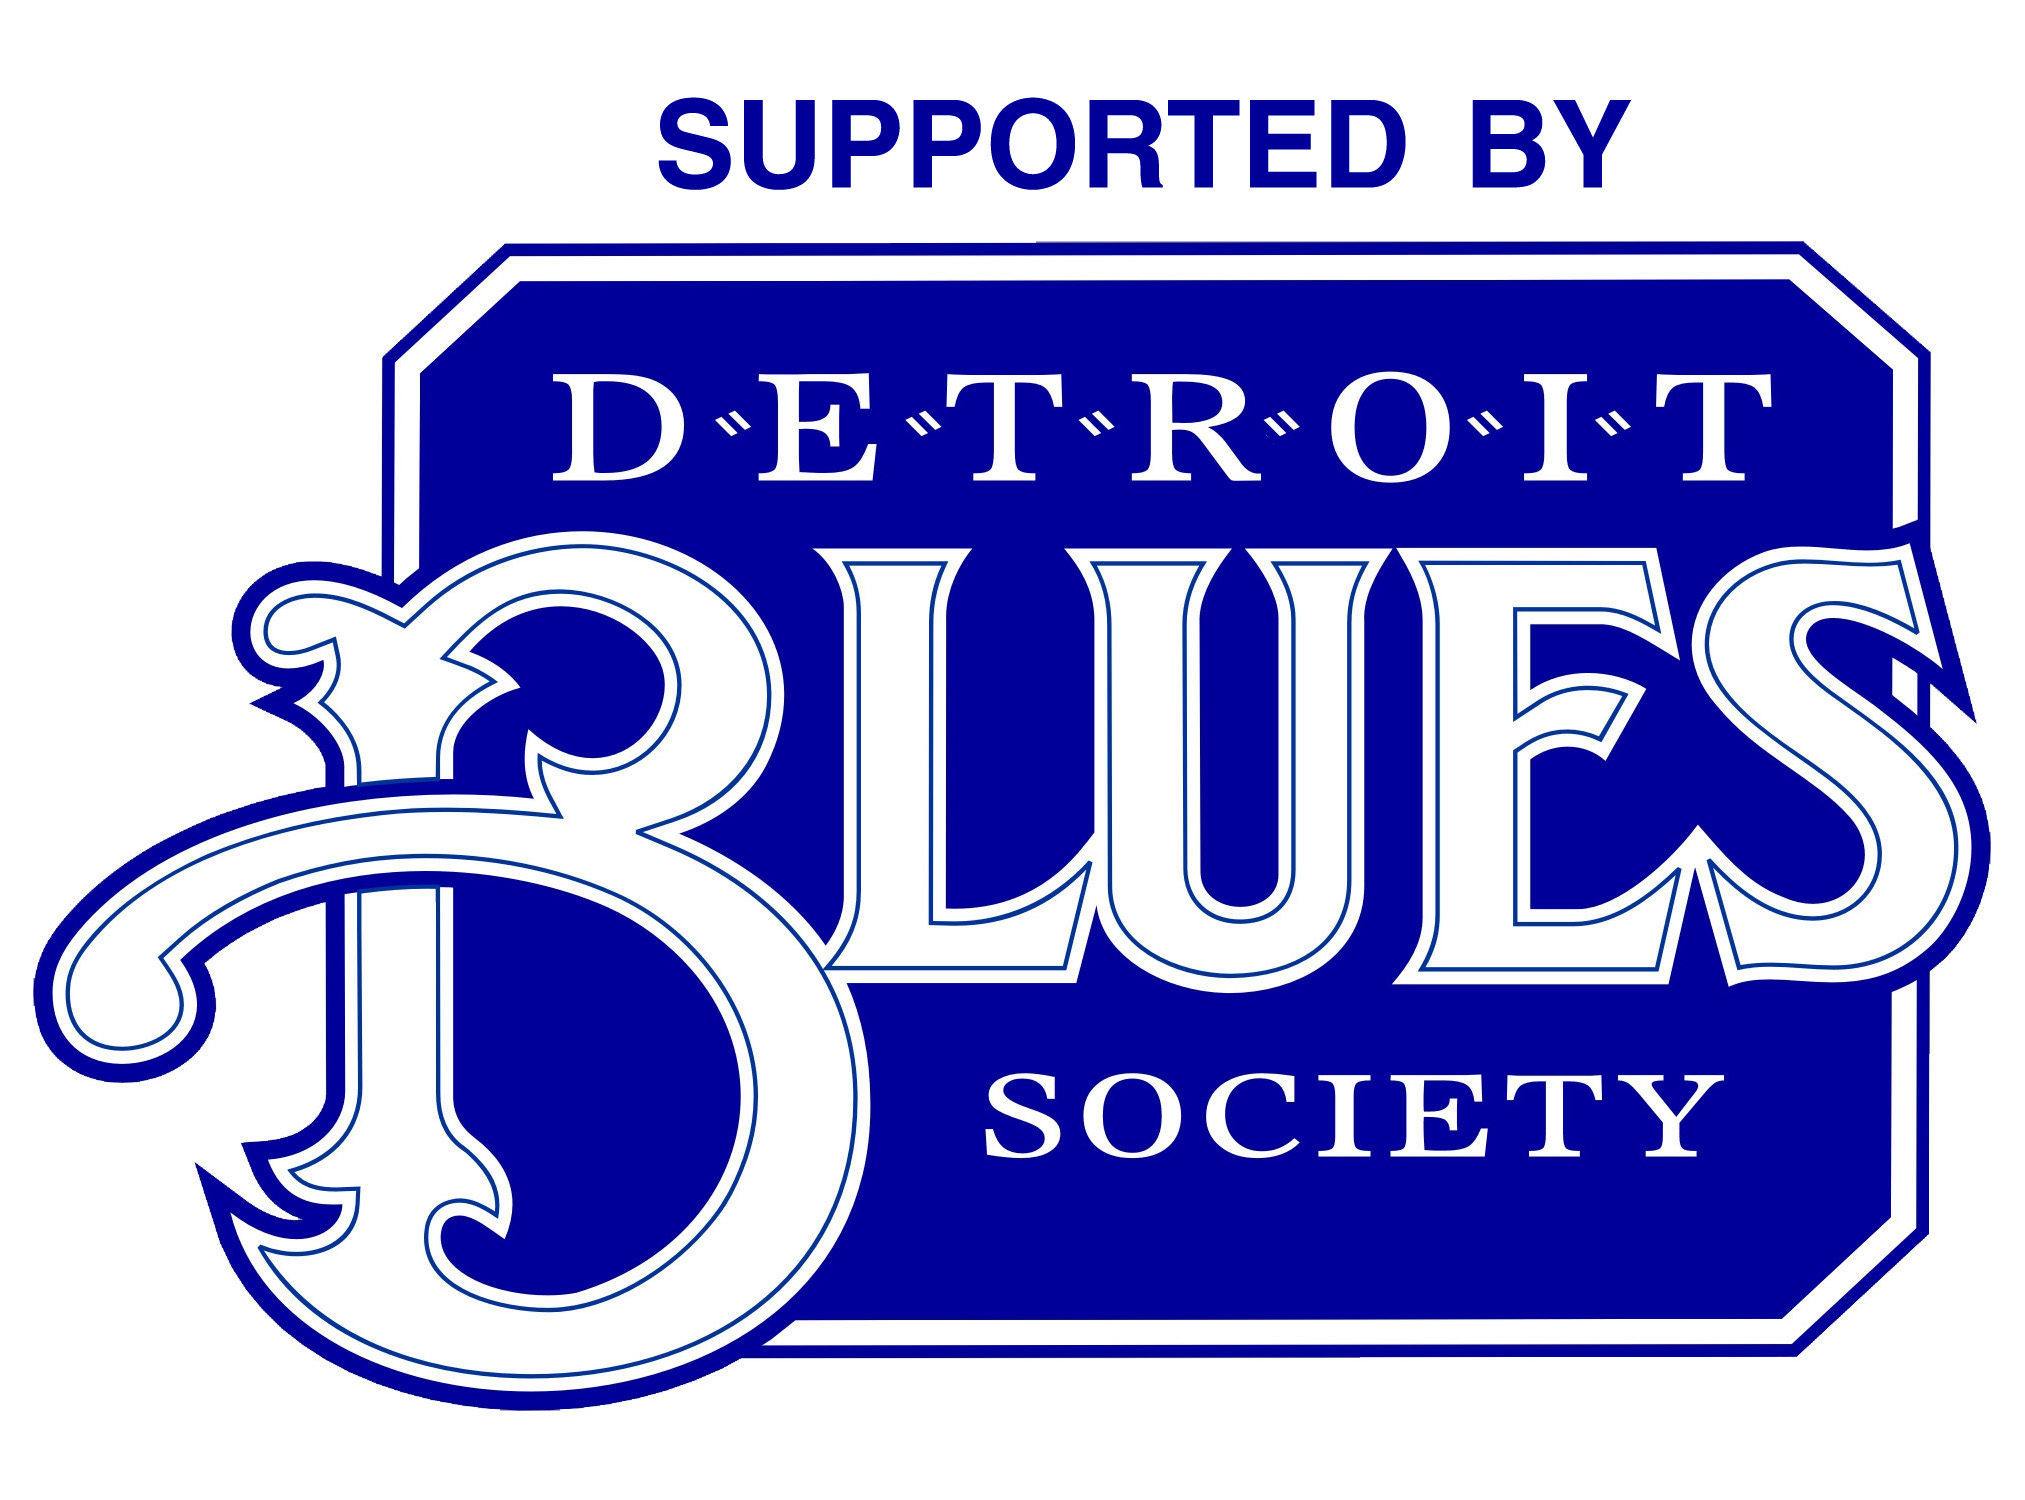 Society 9. Blues логотип. Детройт блюз бэнд. "Ferndale" логотип. Керамический блюз лого.